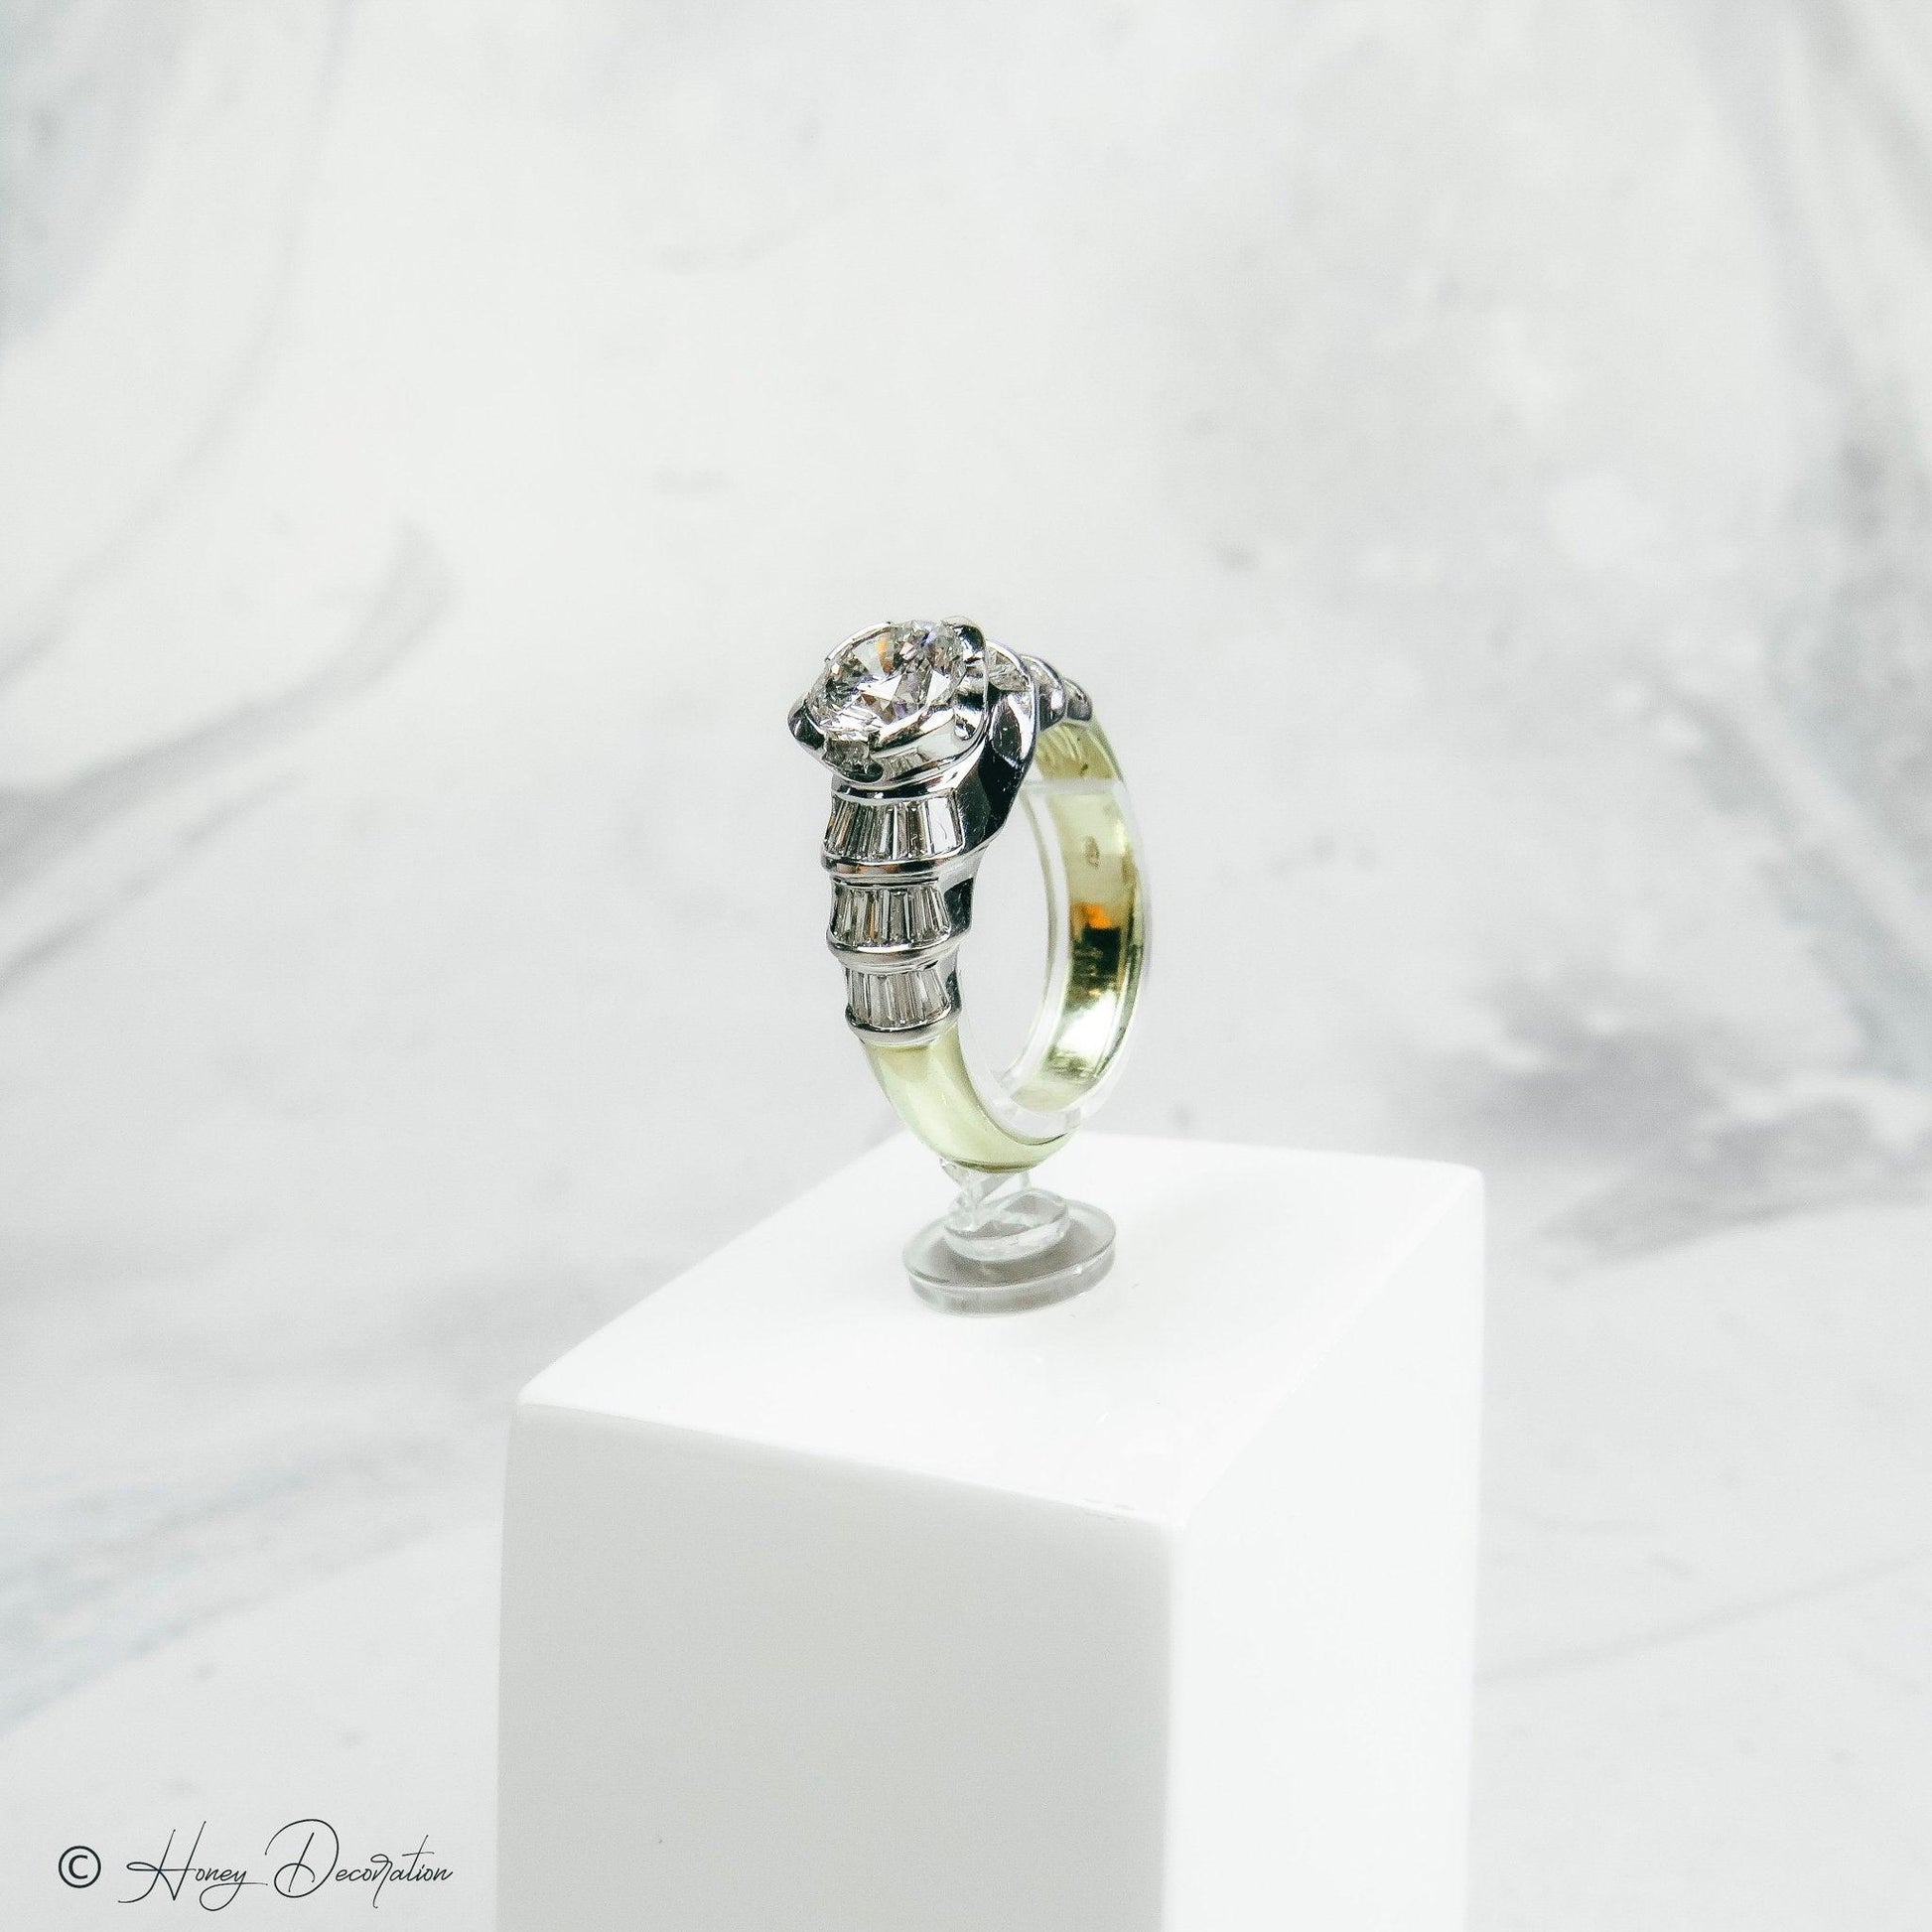 Prächtiger 18 Karat Bicolor-Ring mit Diamanten - Honey Decoration